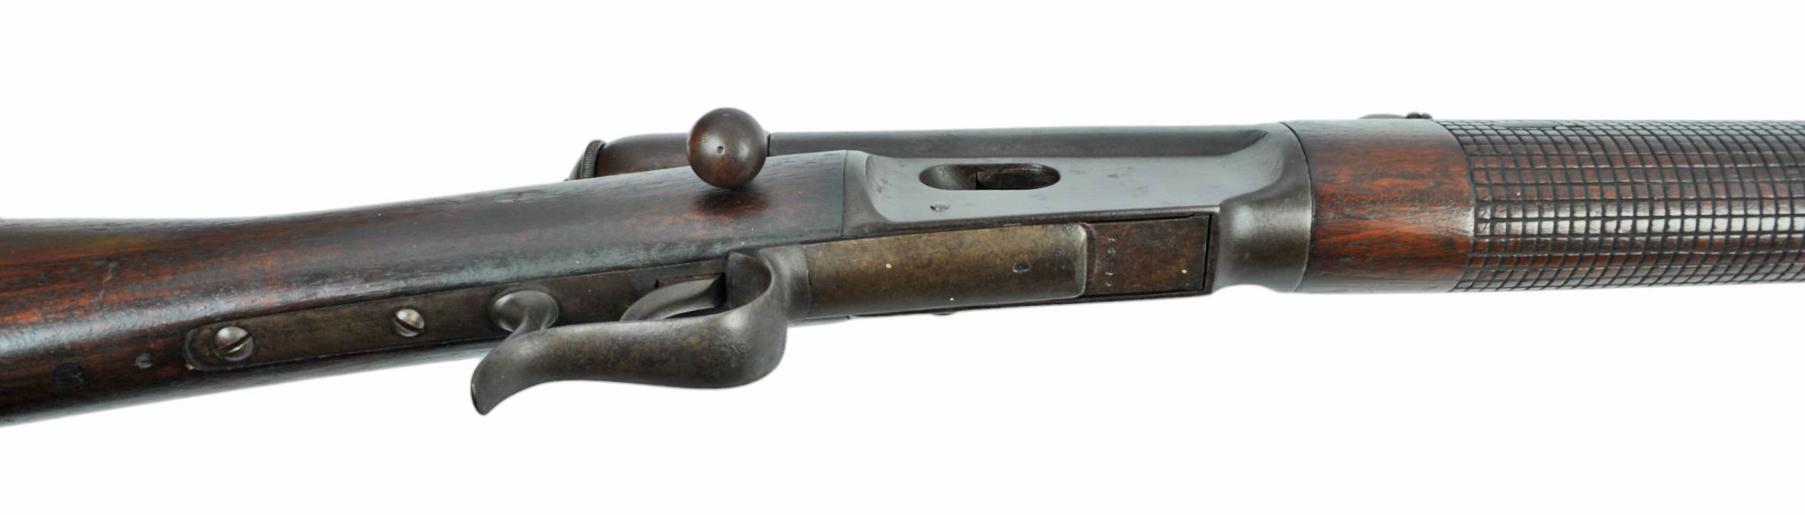 Swiss Military Model 1871 10.4x38mm Vetterli Bolt-Action Rifle - Antique - no FFL needed (K1S1)